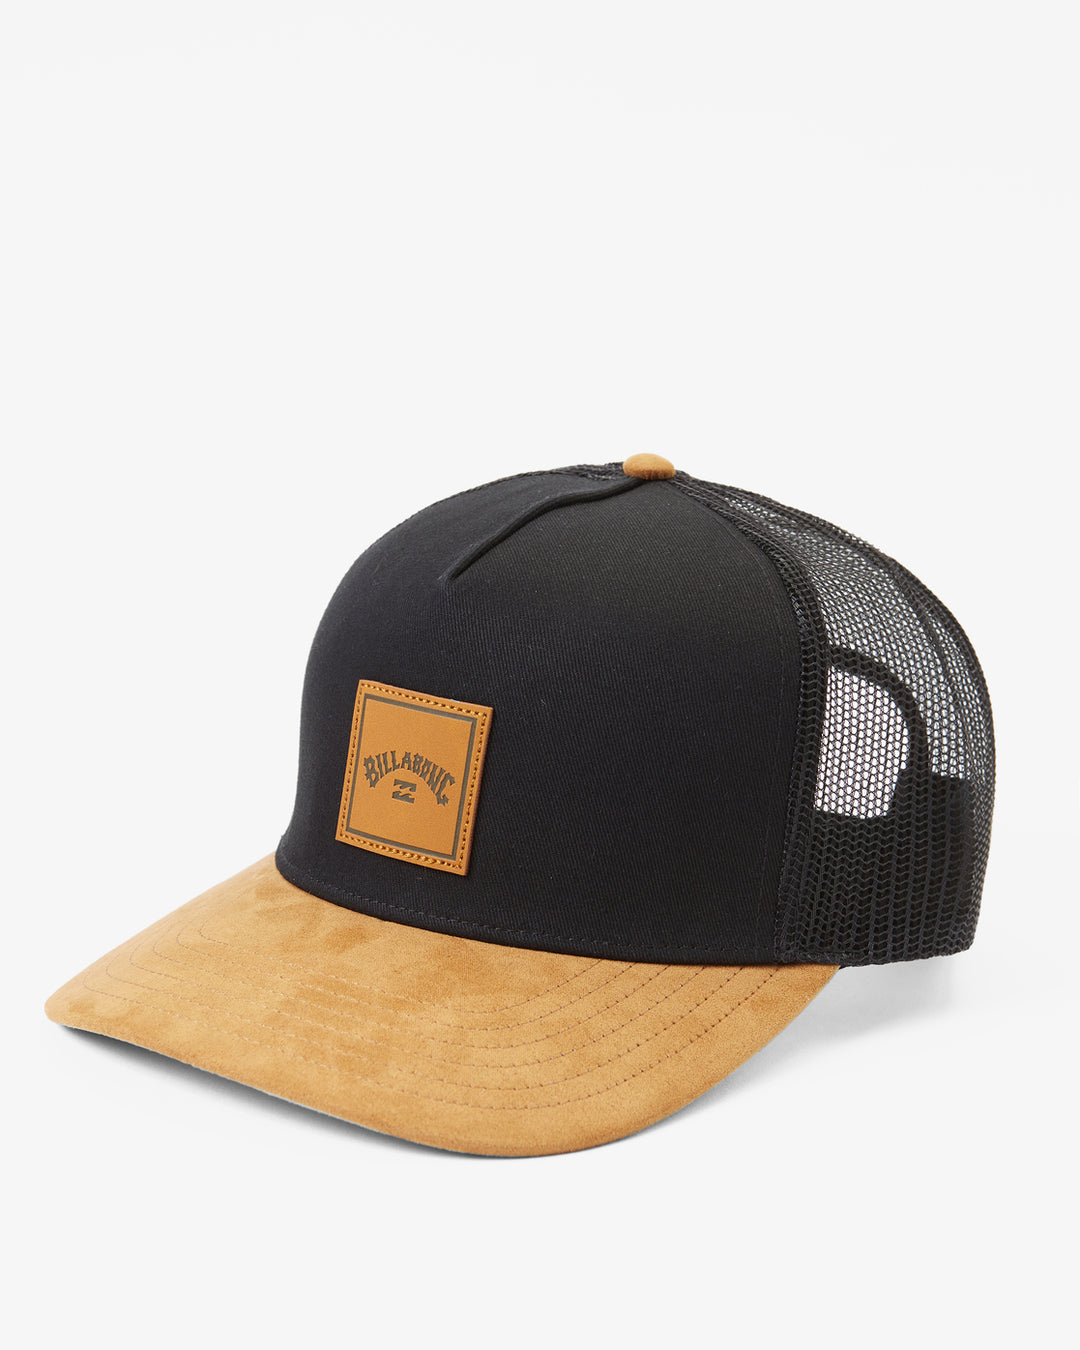 Billabong Stacked Trucker Hat - Black/Tan - Sun Diego Boardshop